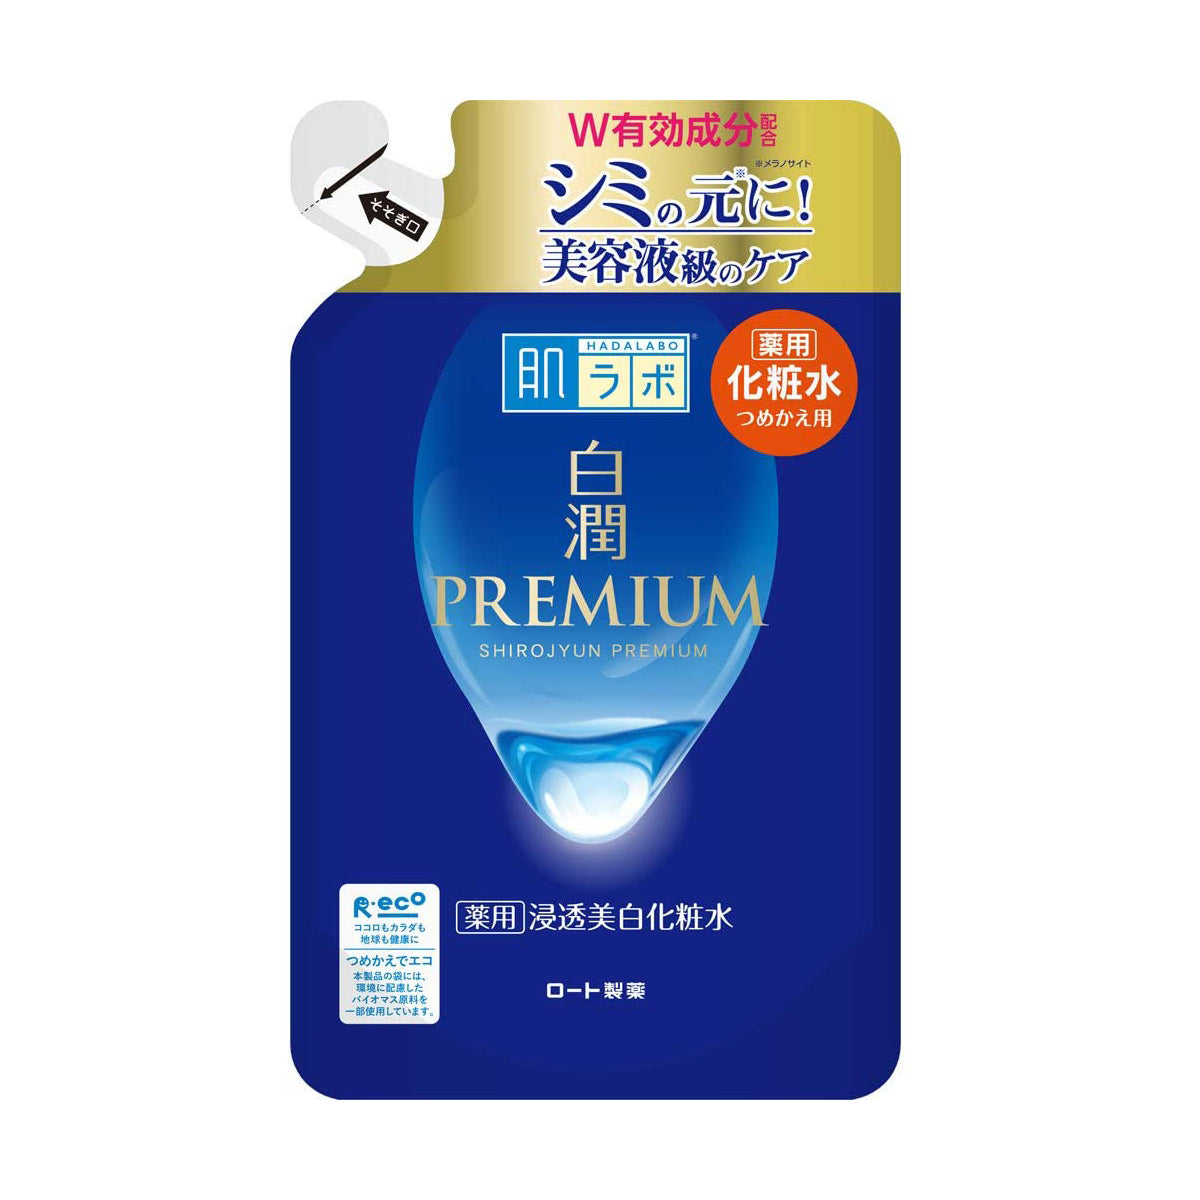 Rohto Hadalabo Shirojyun Premium Brightening Lotion Refill Beauty Rohto   